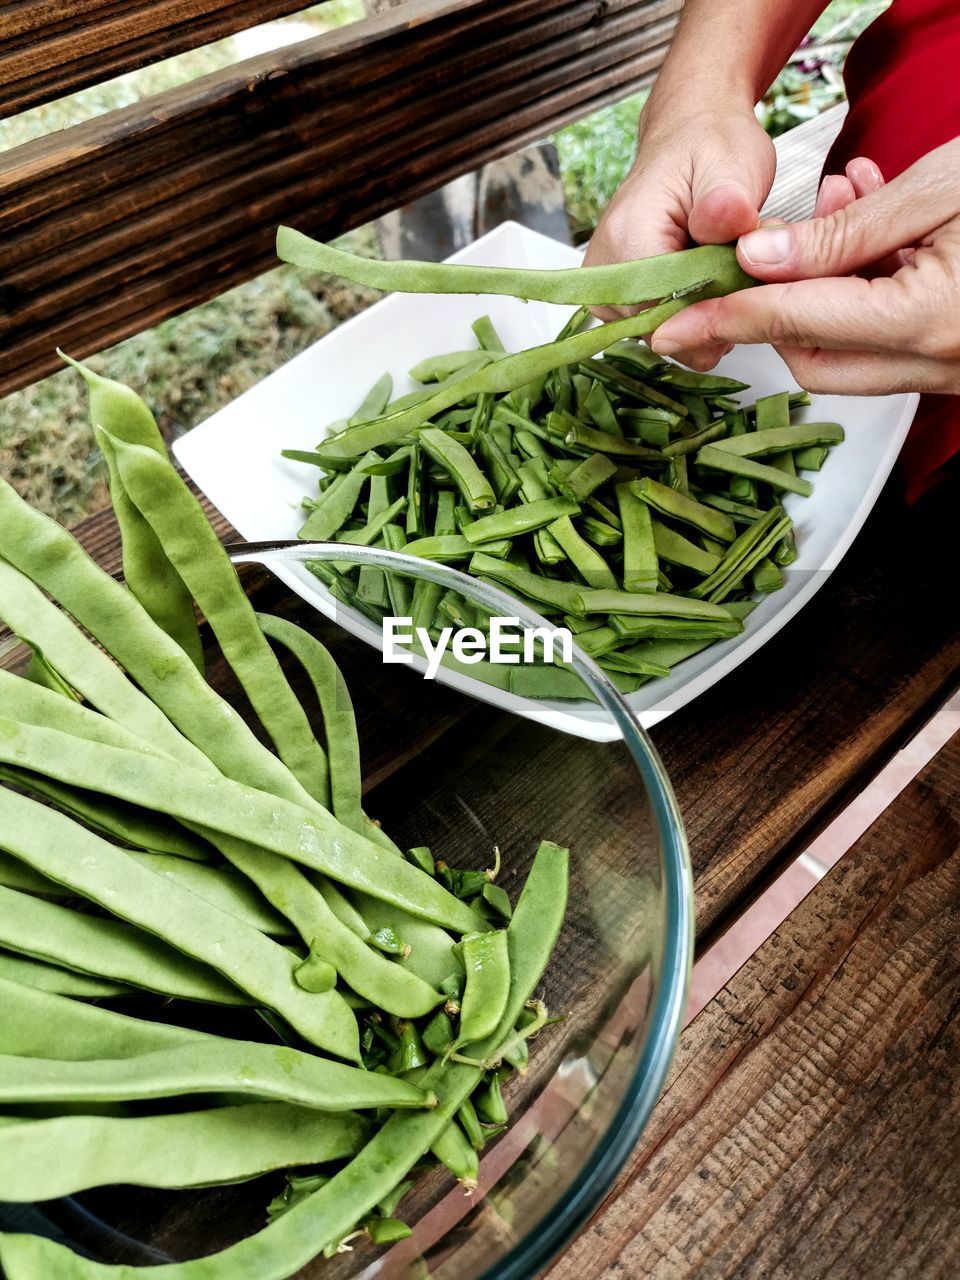 Preparing green beans for the vegan salad